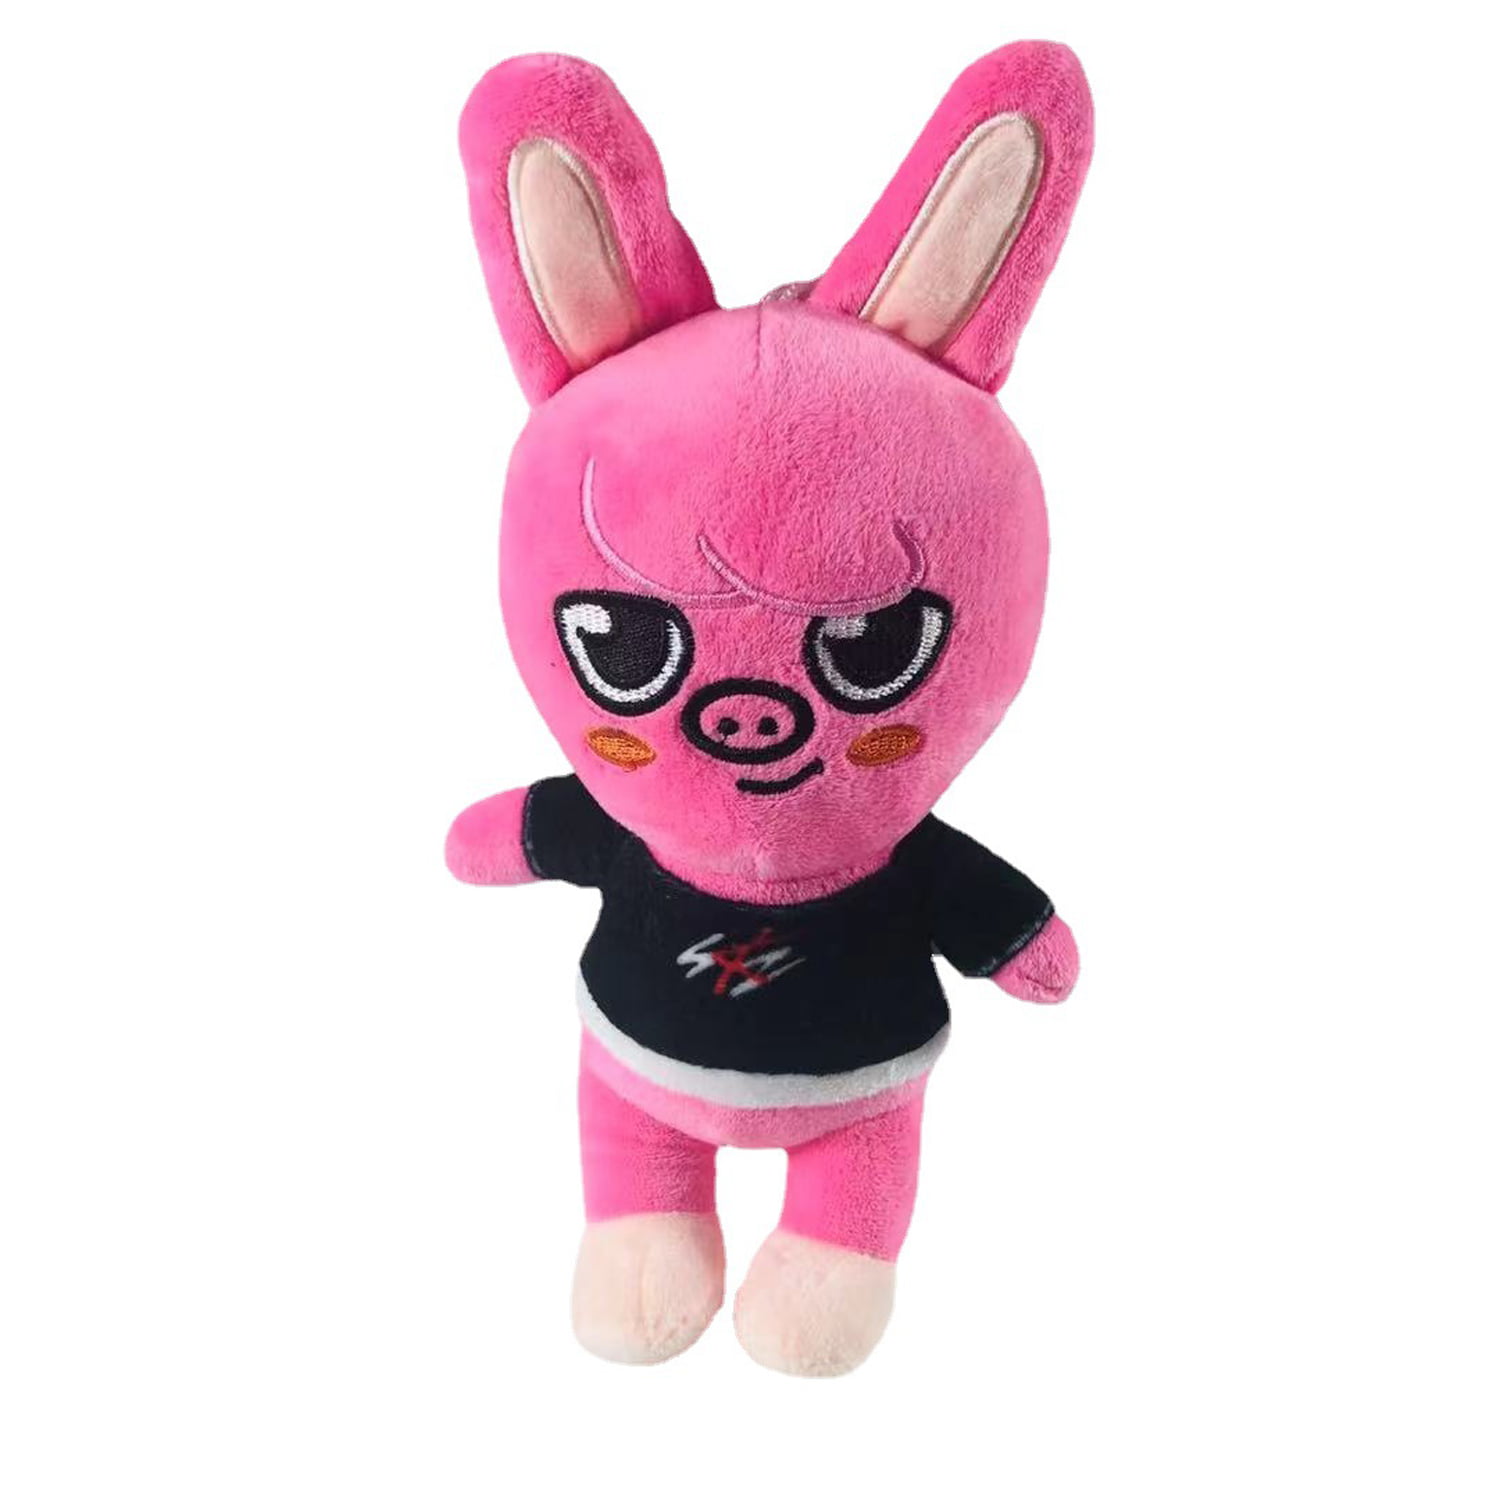 Buy Skzoo Plush Toys Stray Kids Plush Dolls,20cm Online at Lowest Price ...